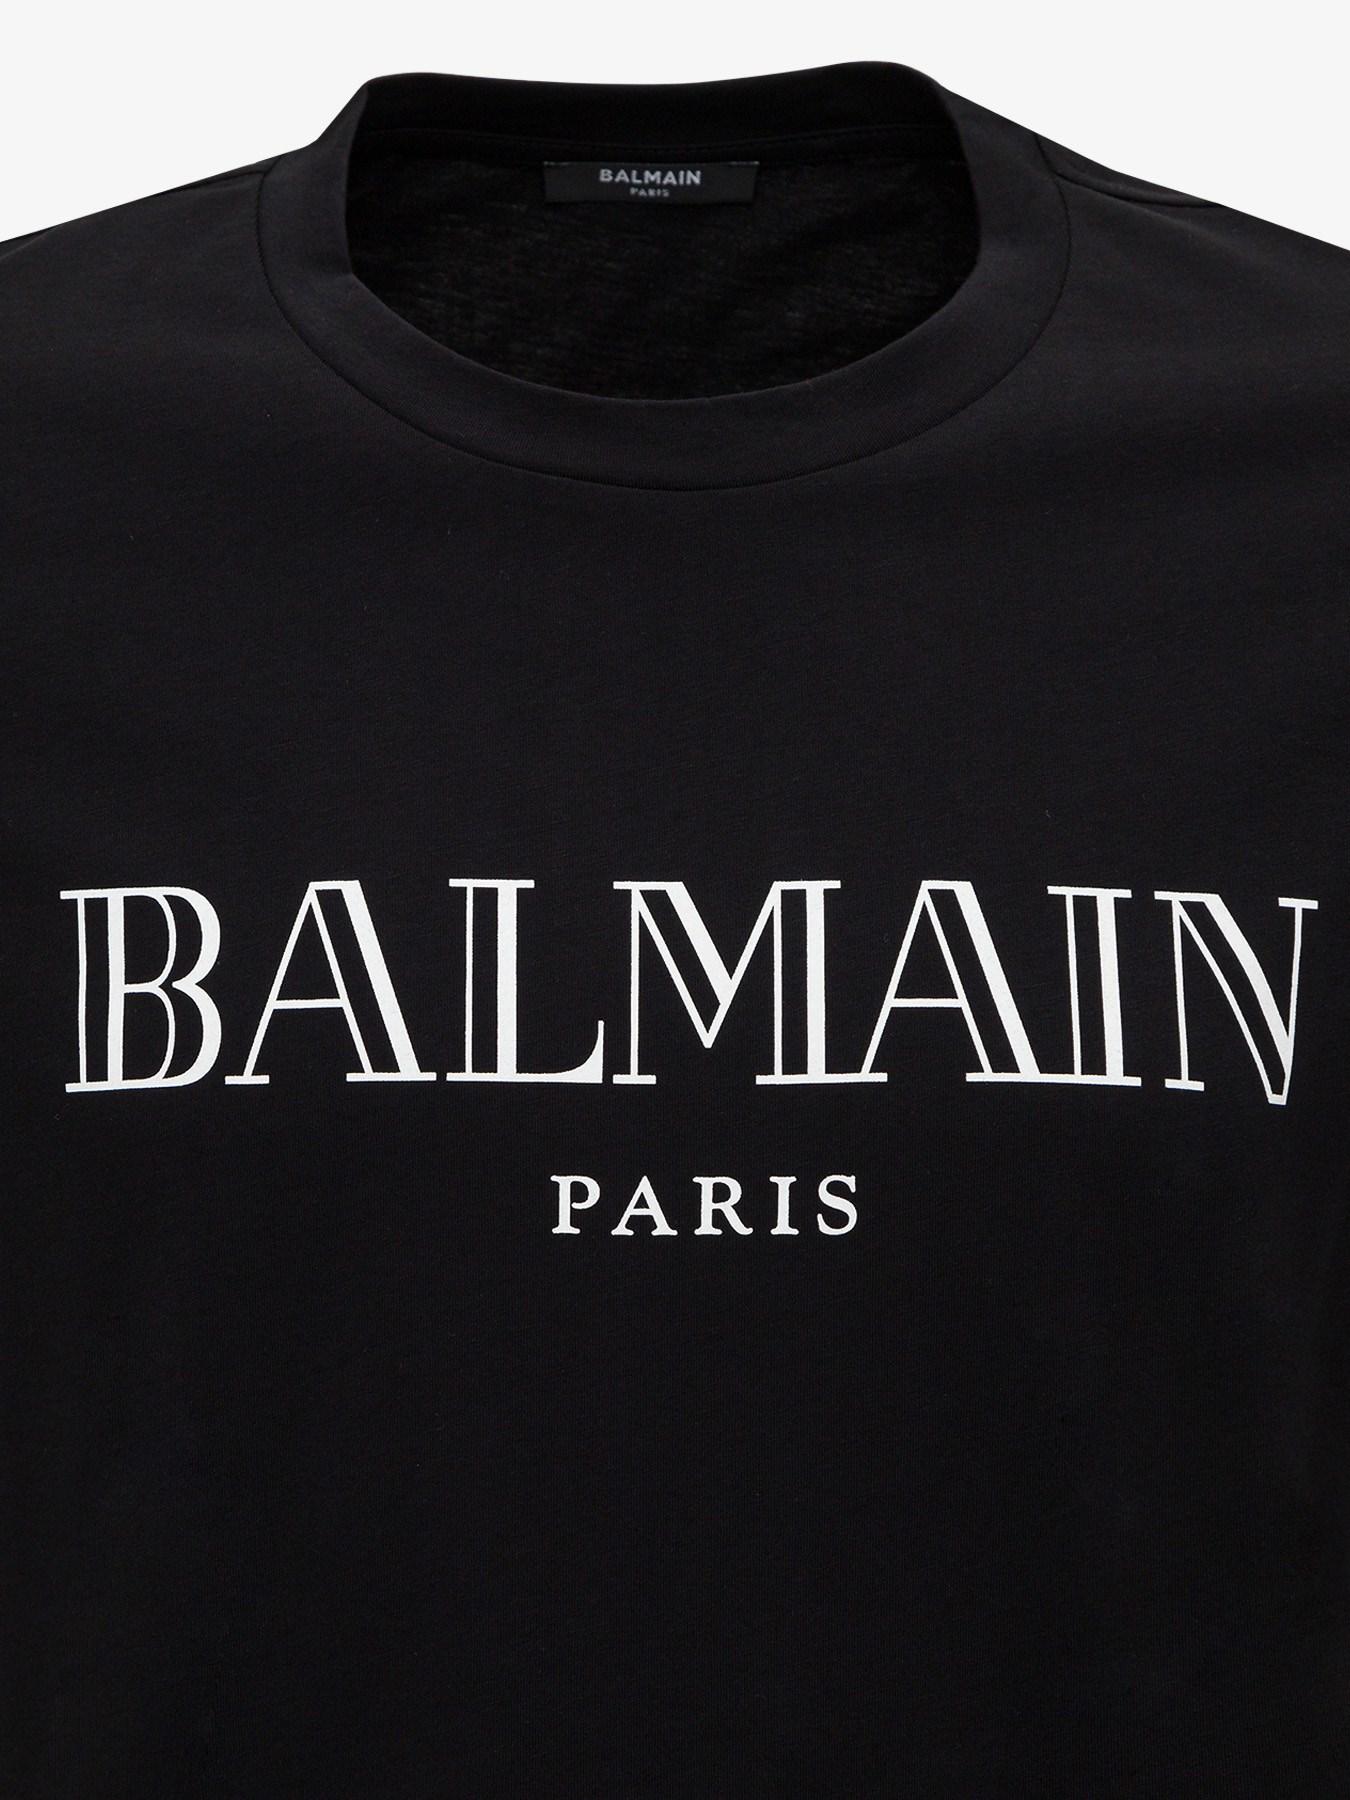 Balmain Vintage Logo Tee in Black for Men - Lyst